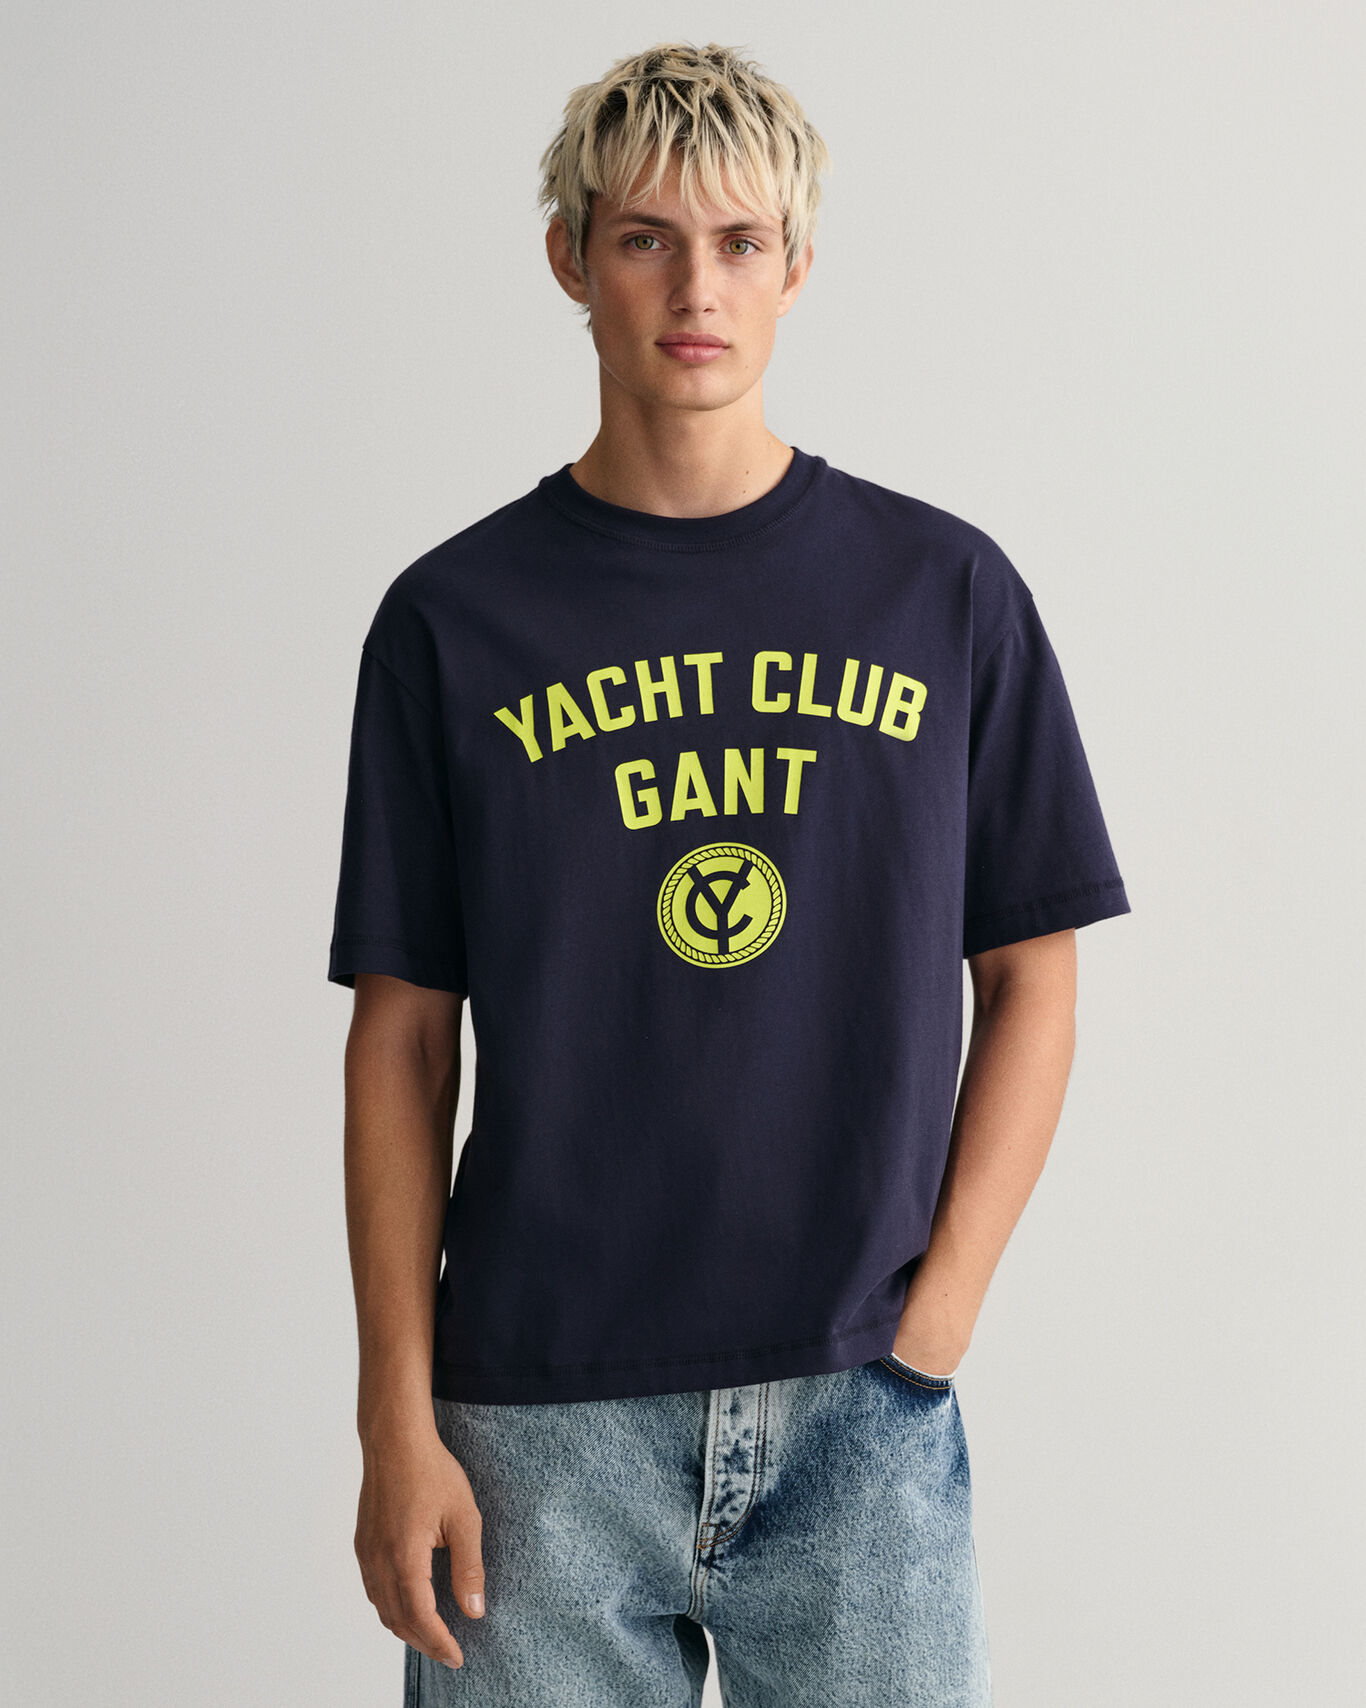 Yacht t-shirt